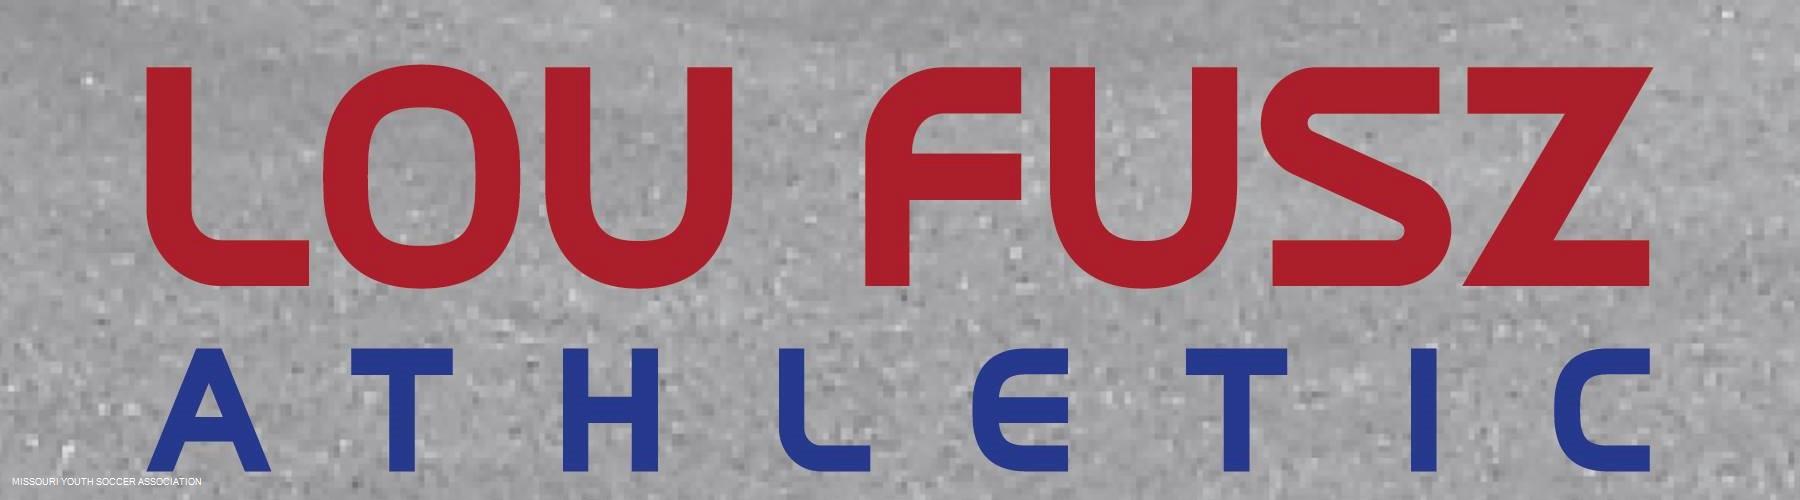 Lou Fusz Athletic - 01 banner